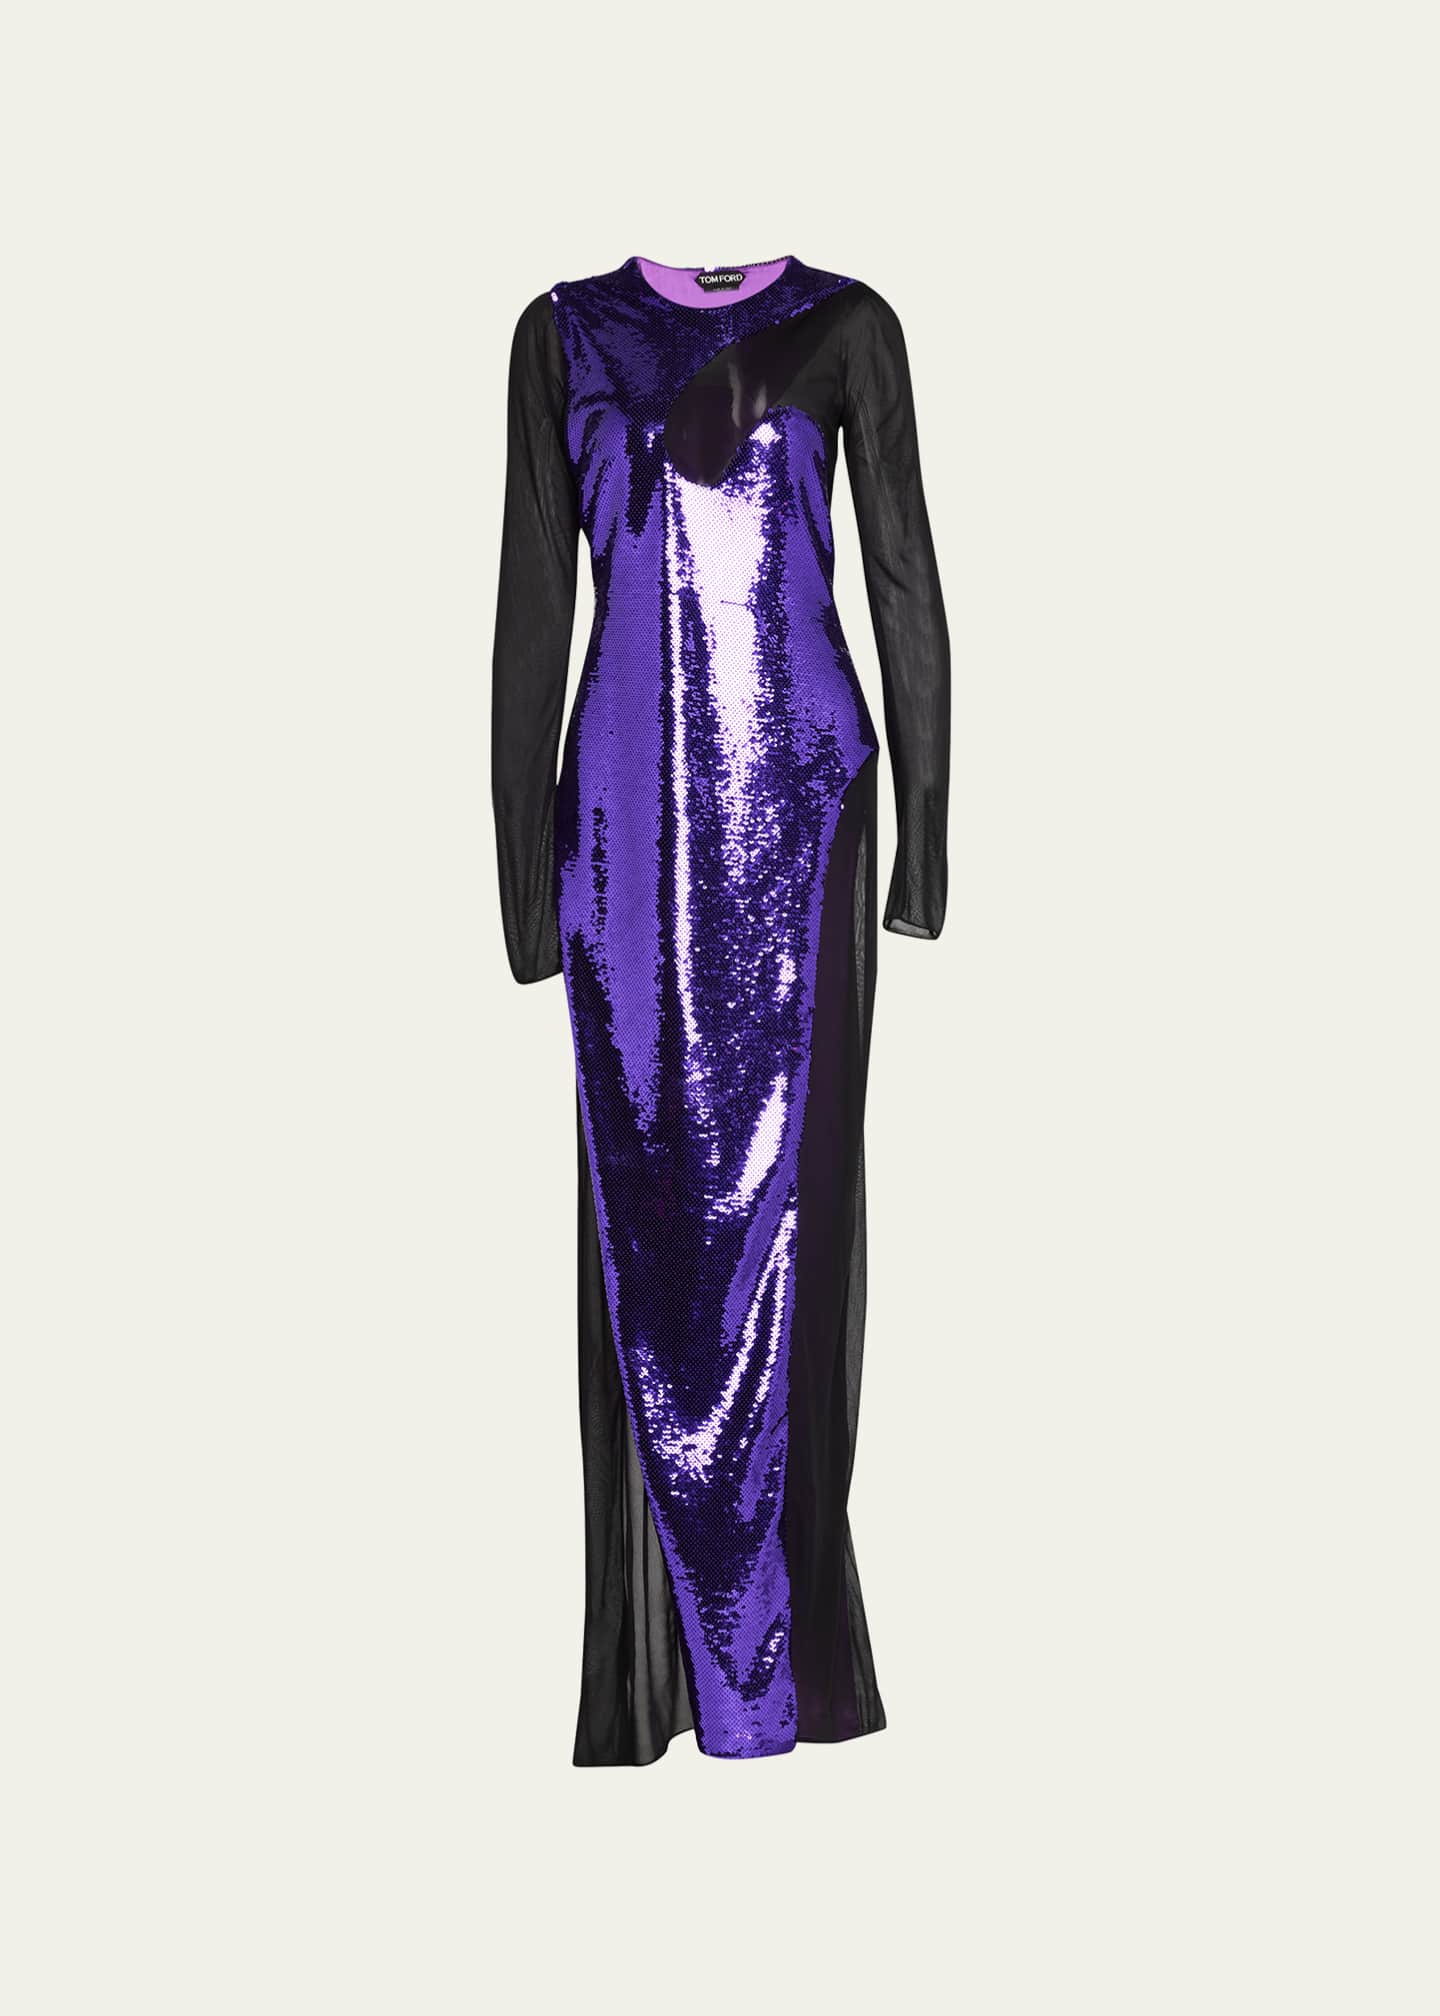 TOM FORD Mesh Evening Dress w/ Liquid Sequin Detail - Bergdorf Goodman